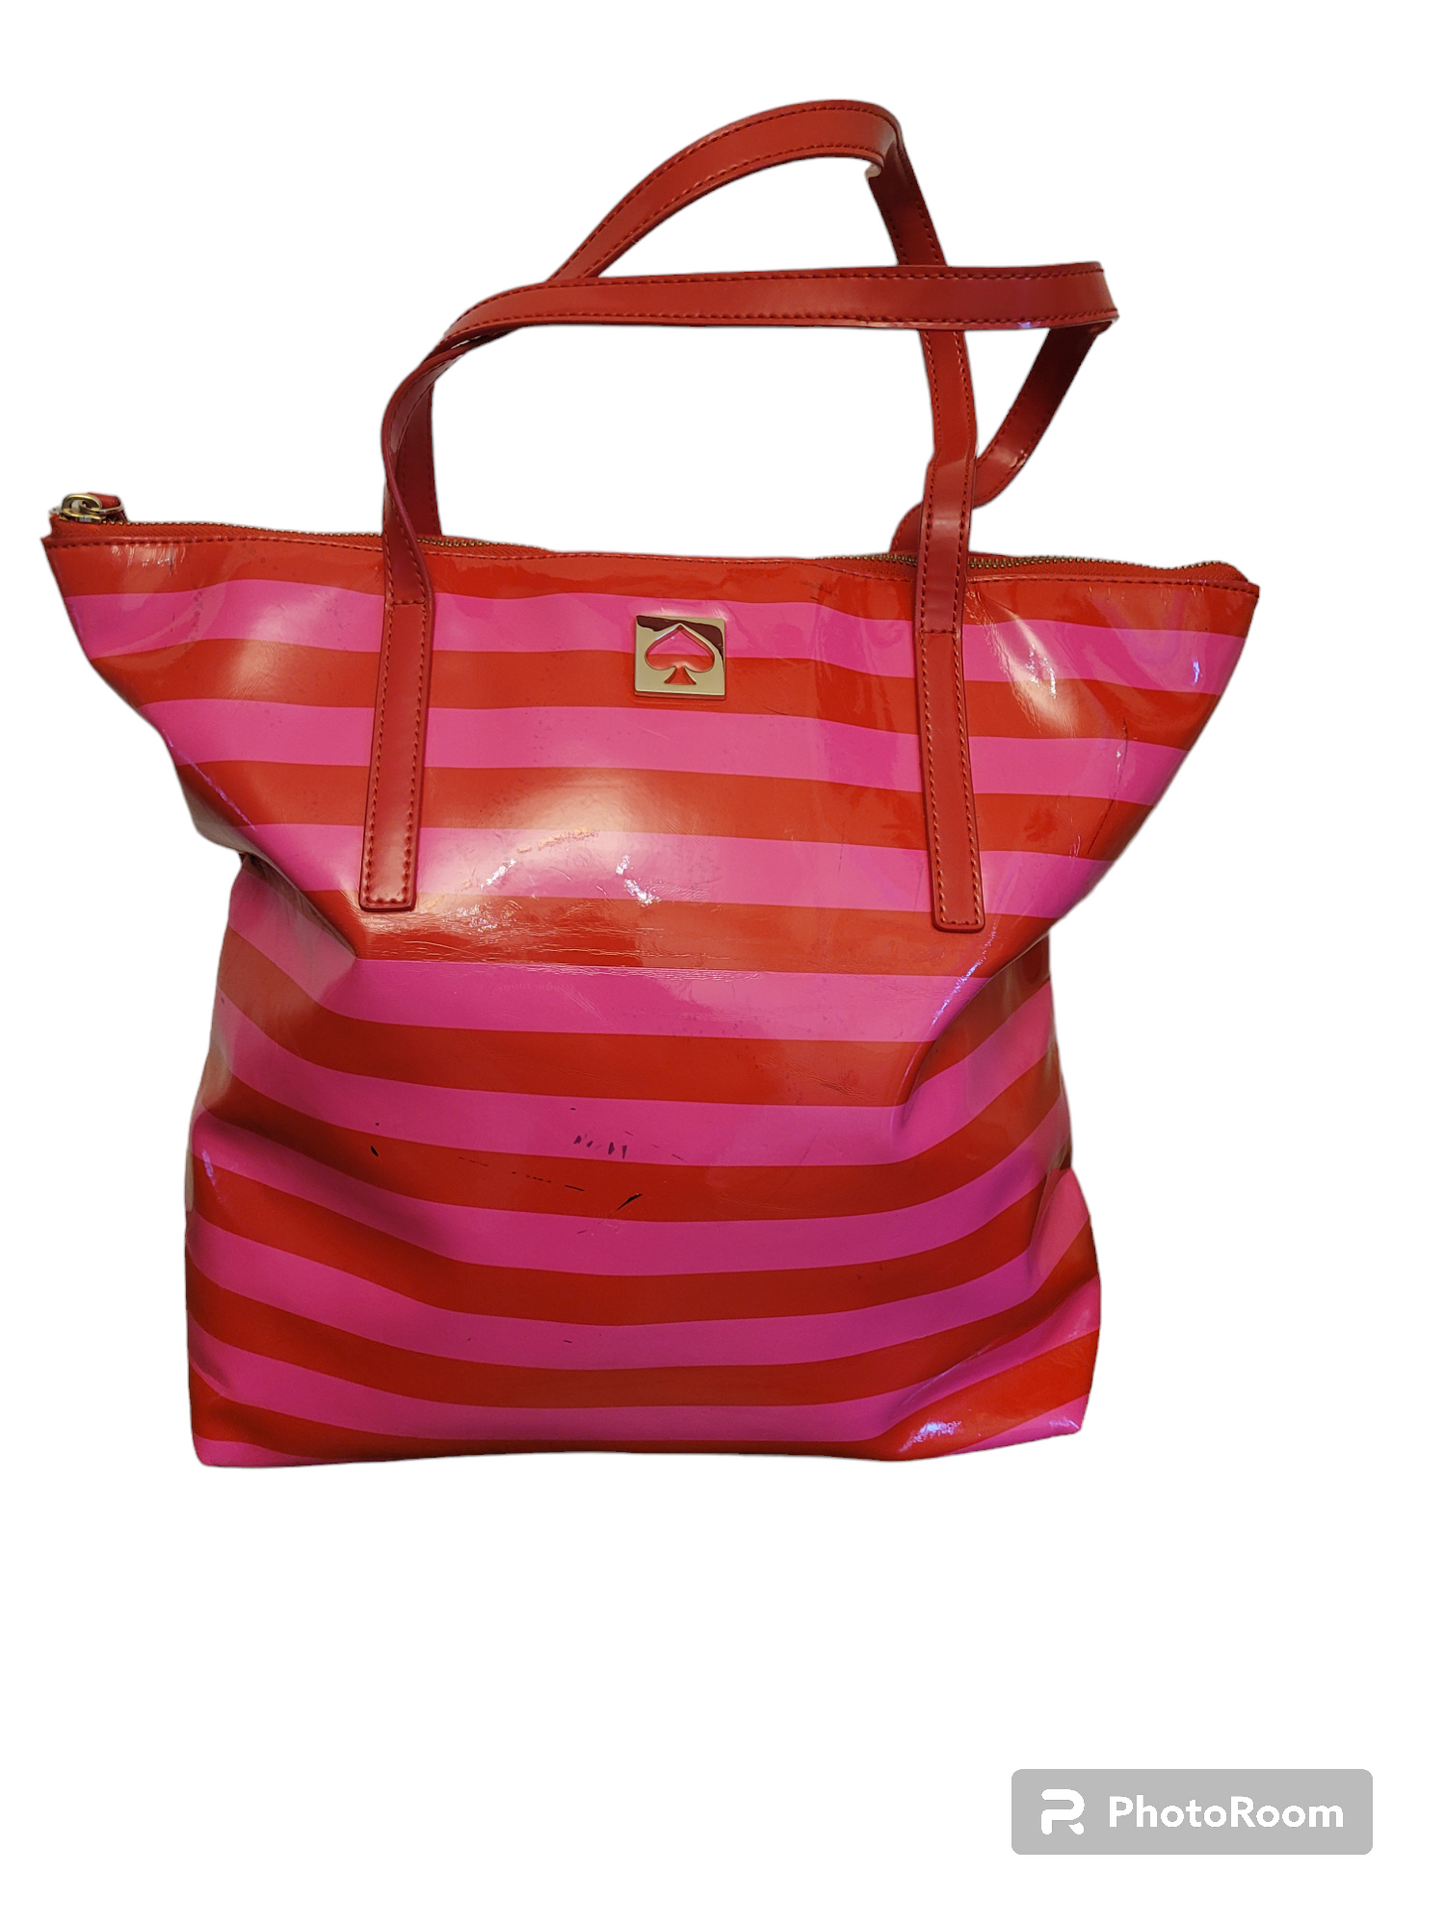 Kate Spade orange and pink striped tote bag